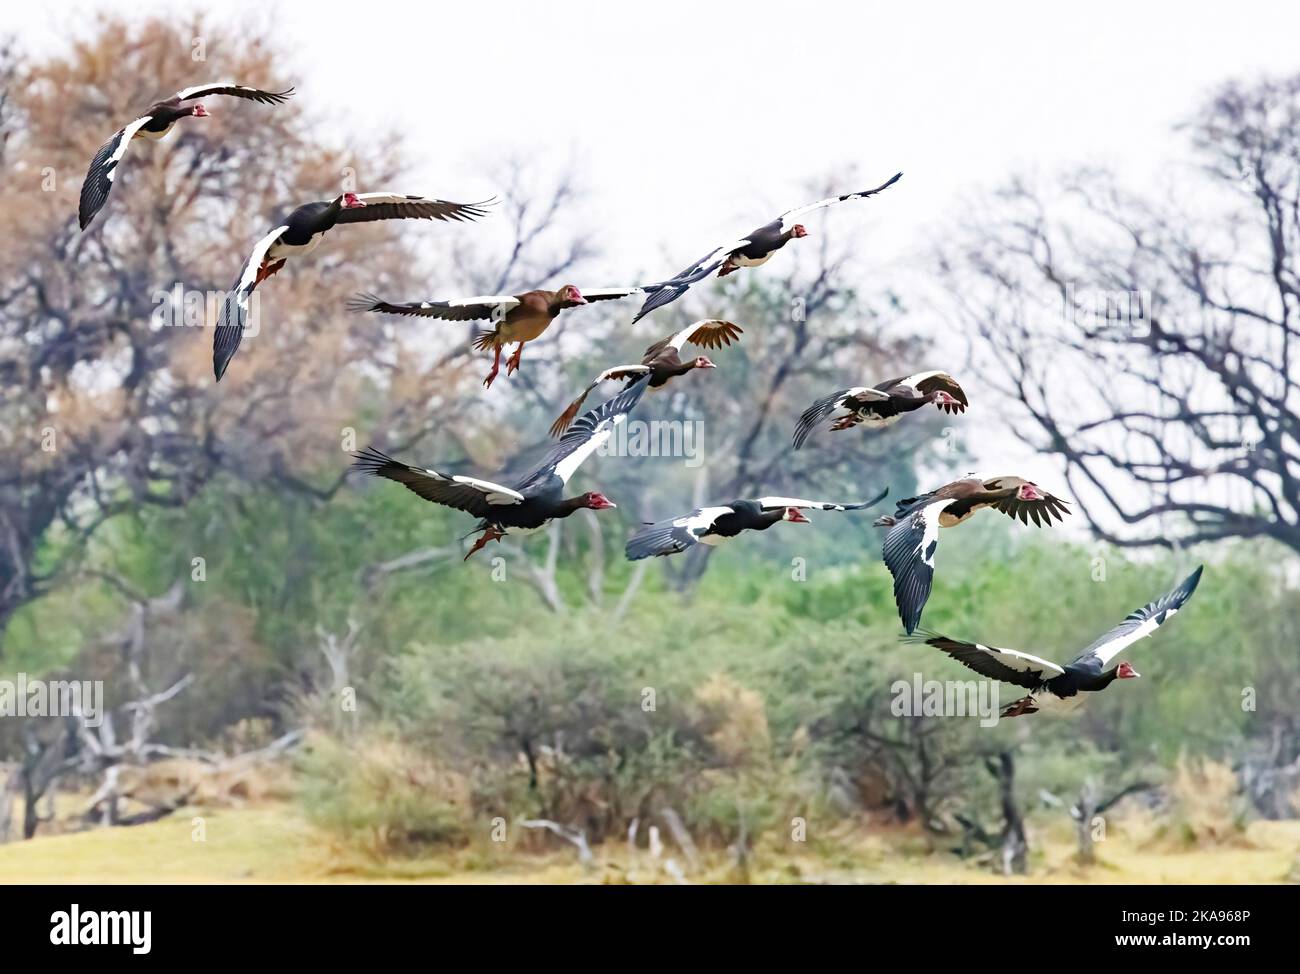 Sporenflügelgans, Plectropterus gambensis. Eine Herde von fliegenden Gänsen, Okavango Delta, Botswana Afrika. Afrikanische Vögel. Stockfoto